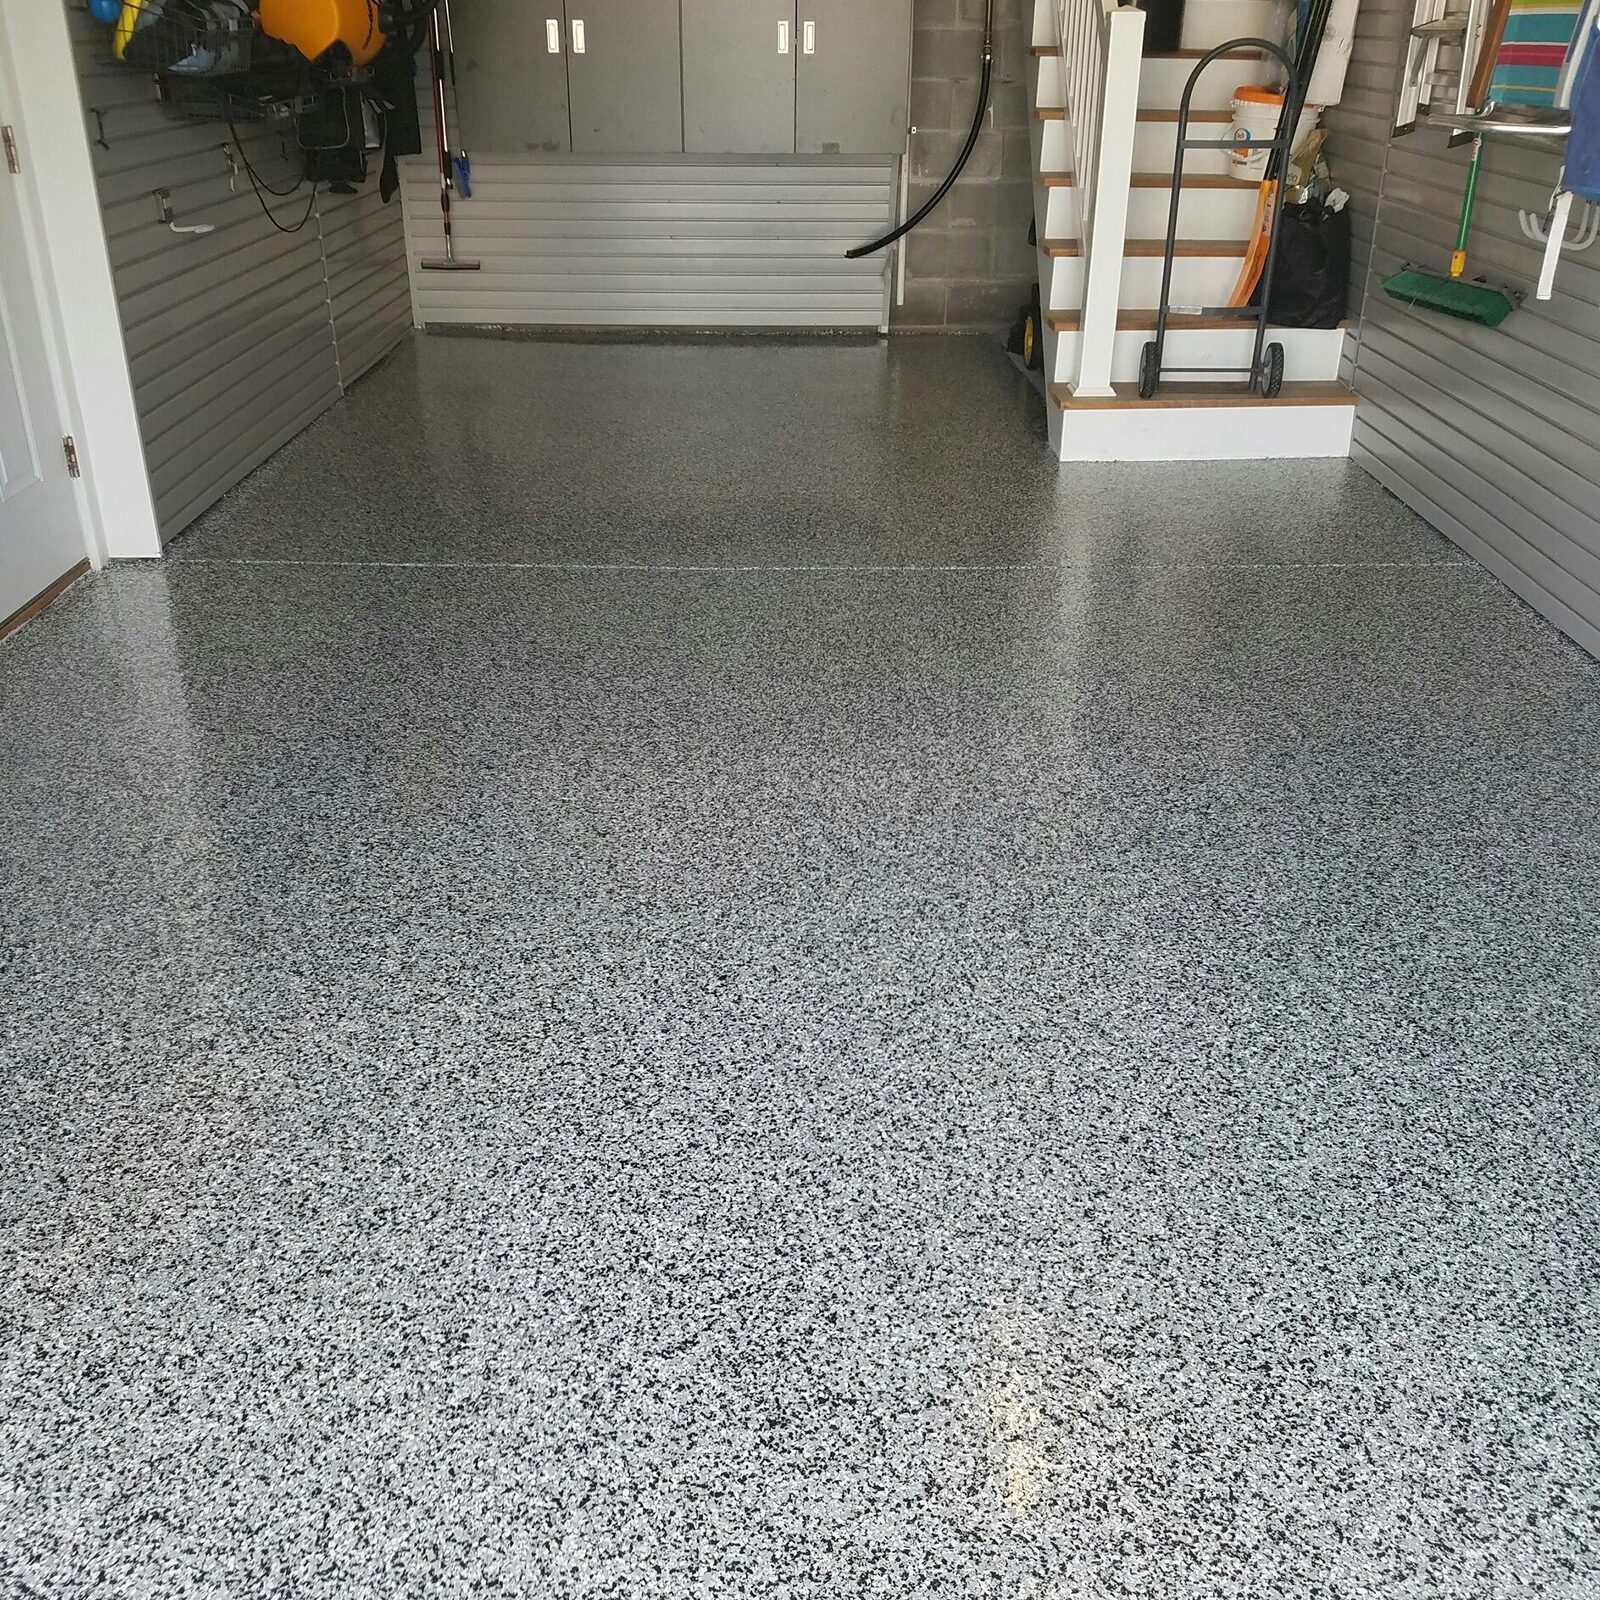 Epoxy Garage Floor Concepts in Concrete Bristol PA